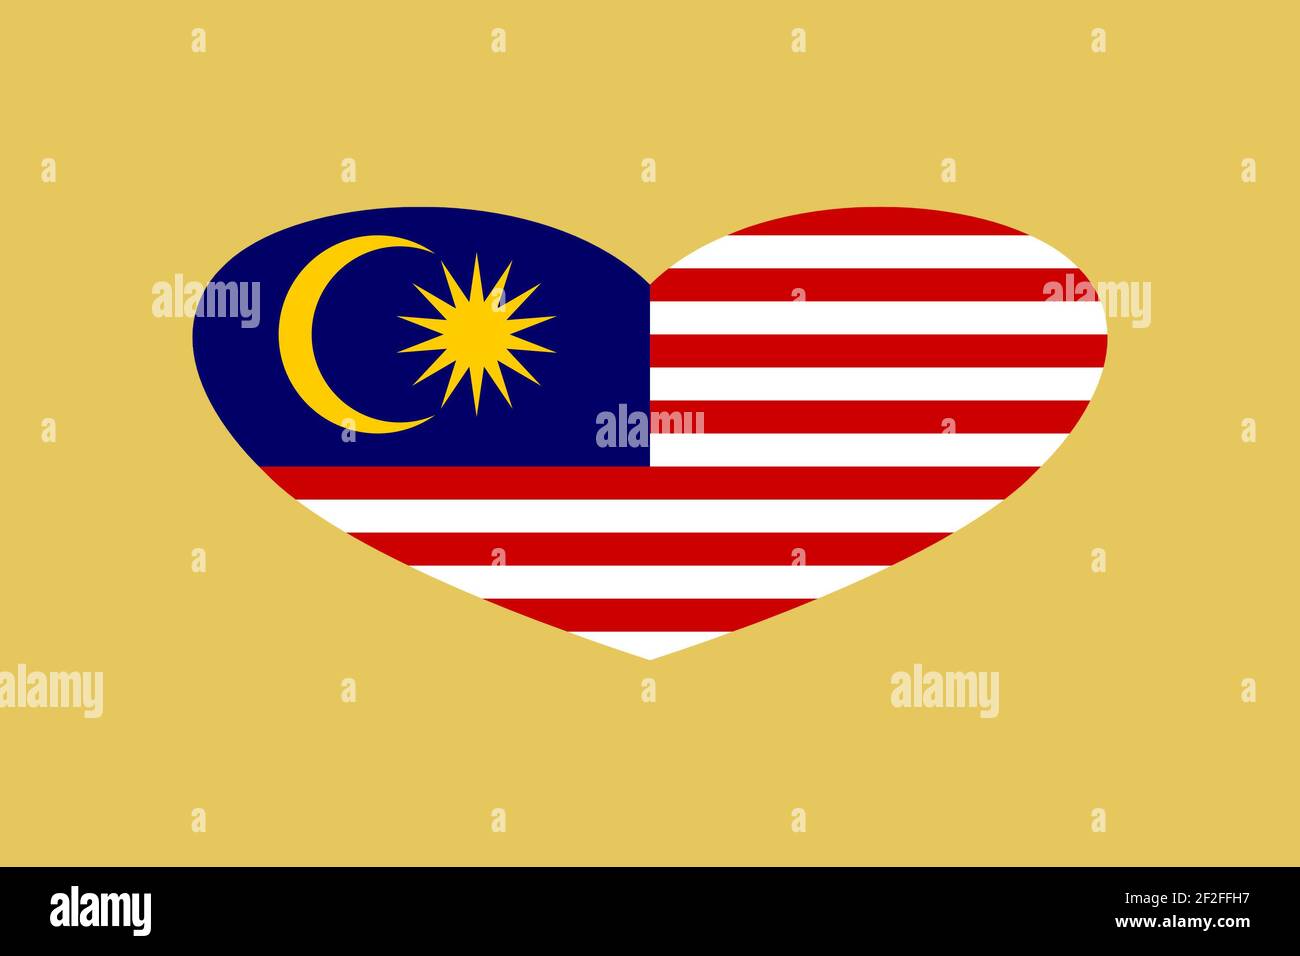 Love Malaysia Heart Flag Icon High Resolution Stock Photography 